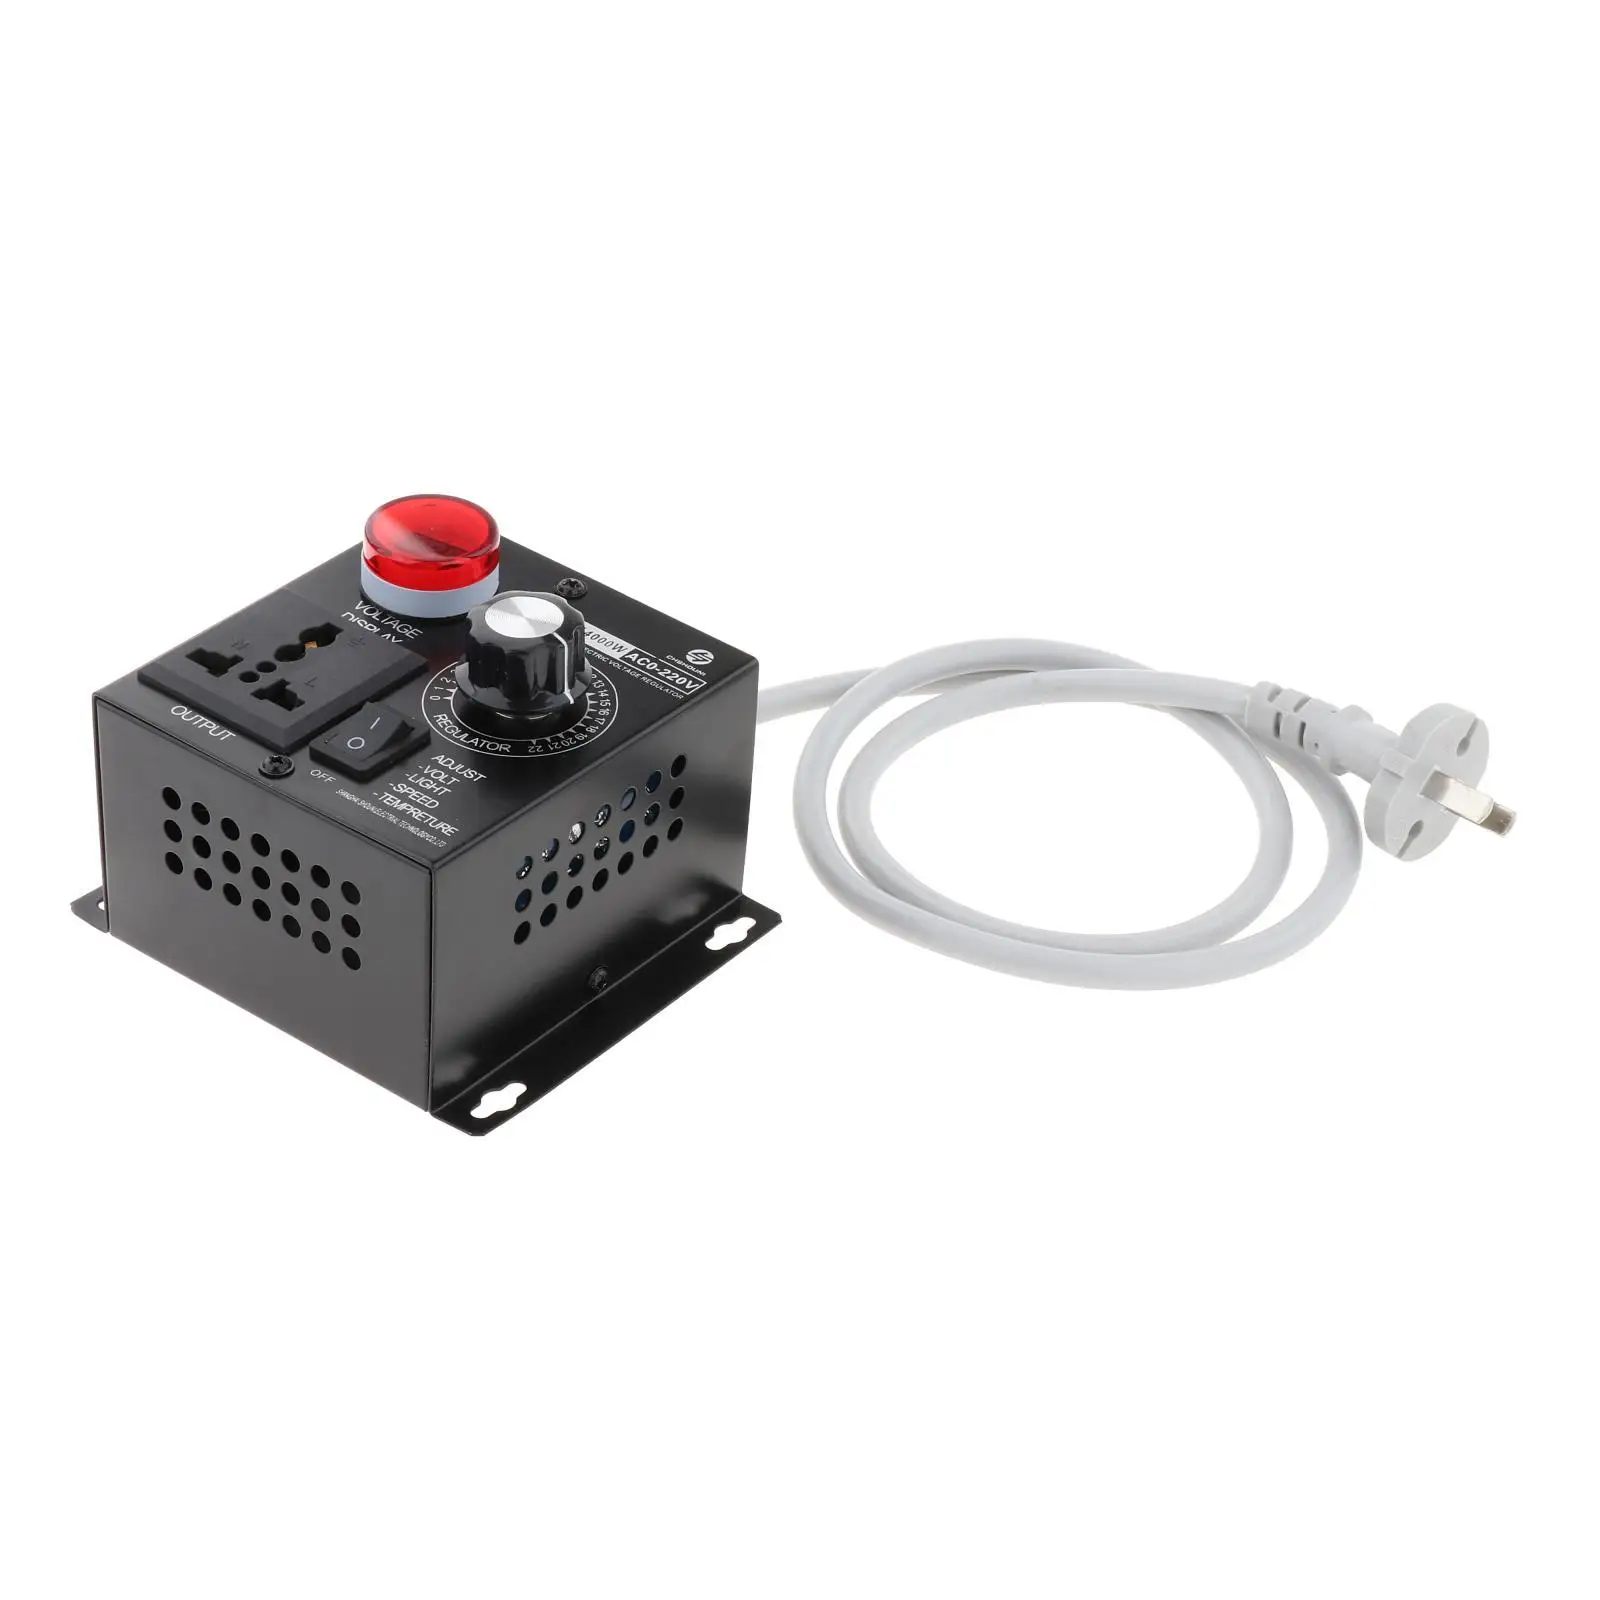 SCR Dimmer Portable Speed Temperature Light Voltage Adjustable Regulator 220V 4000W Compact Variable Voltage Controller US Plug